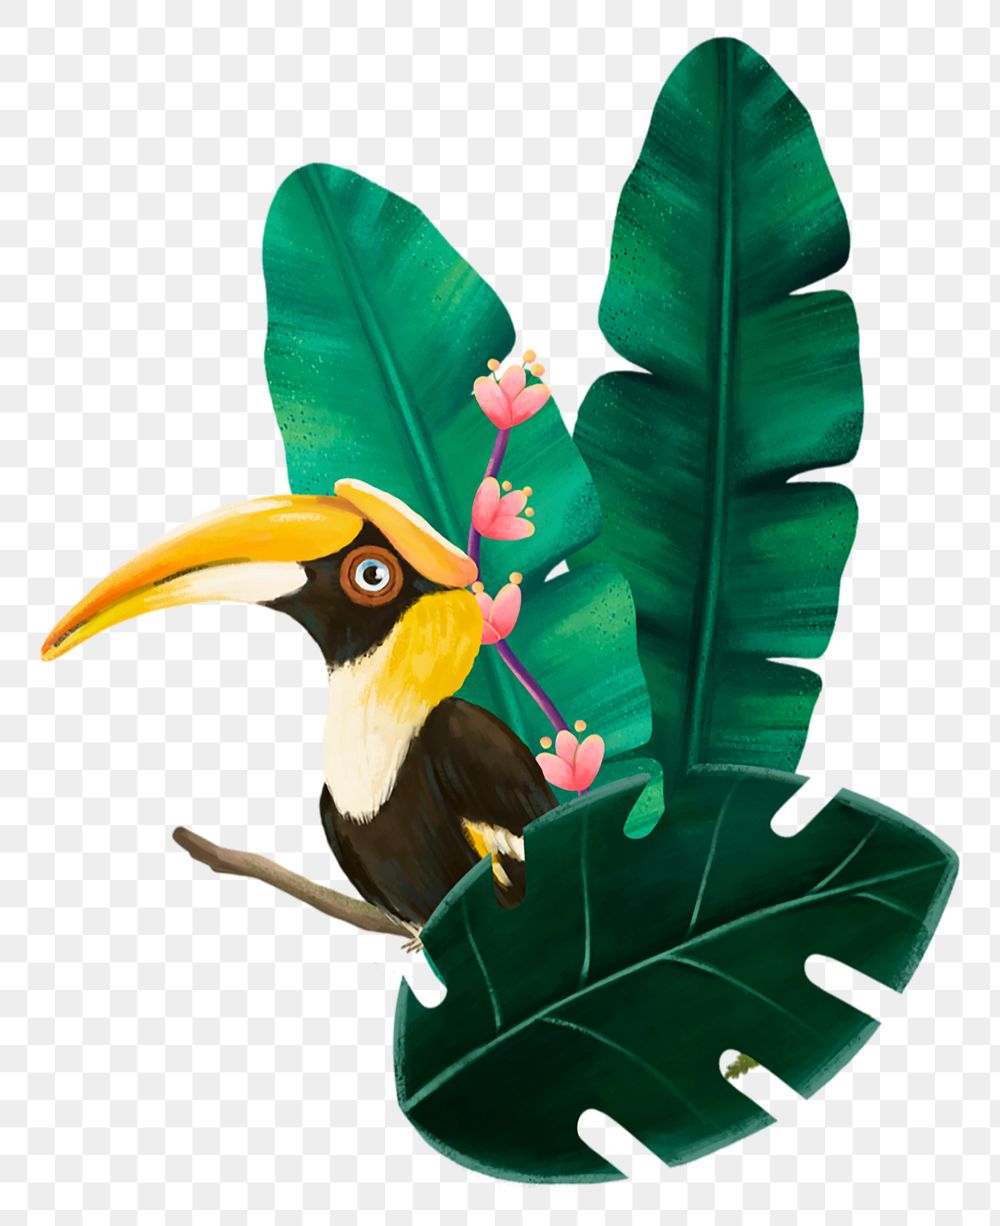 Hornbill bird png sticker, cute animal illustration, transparent background